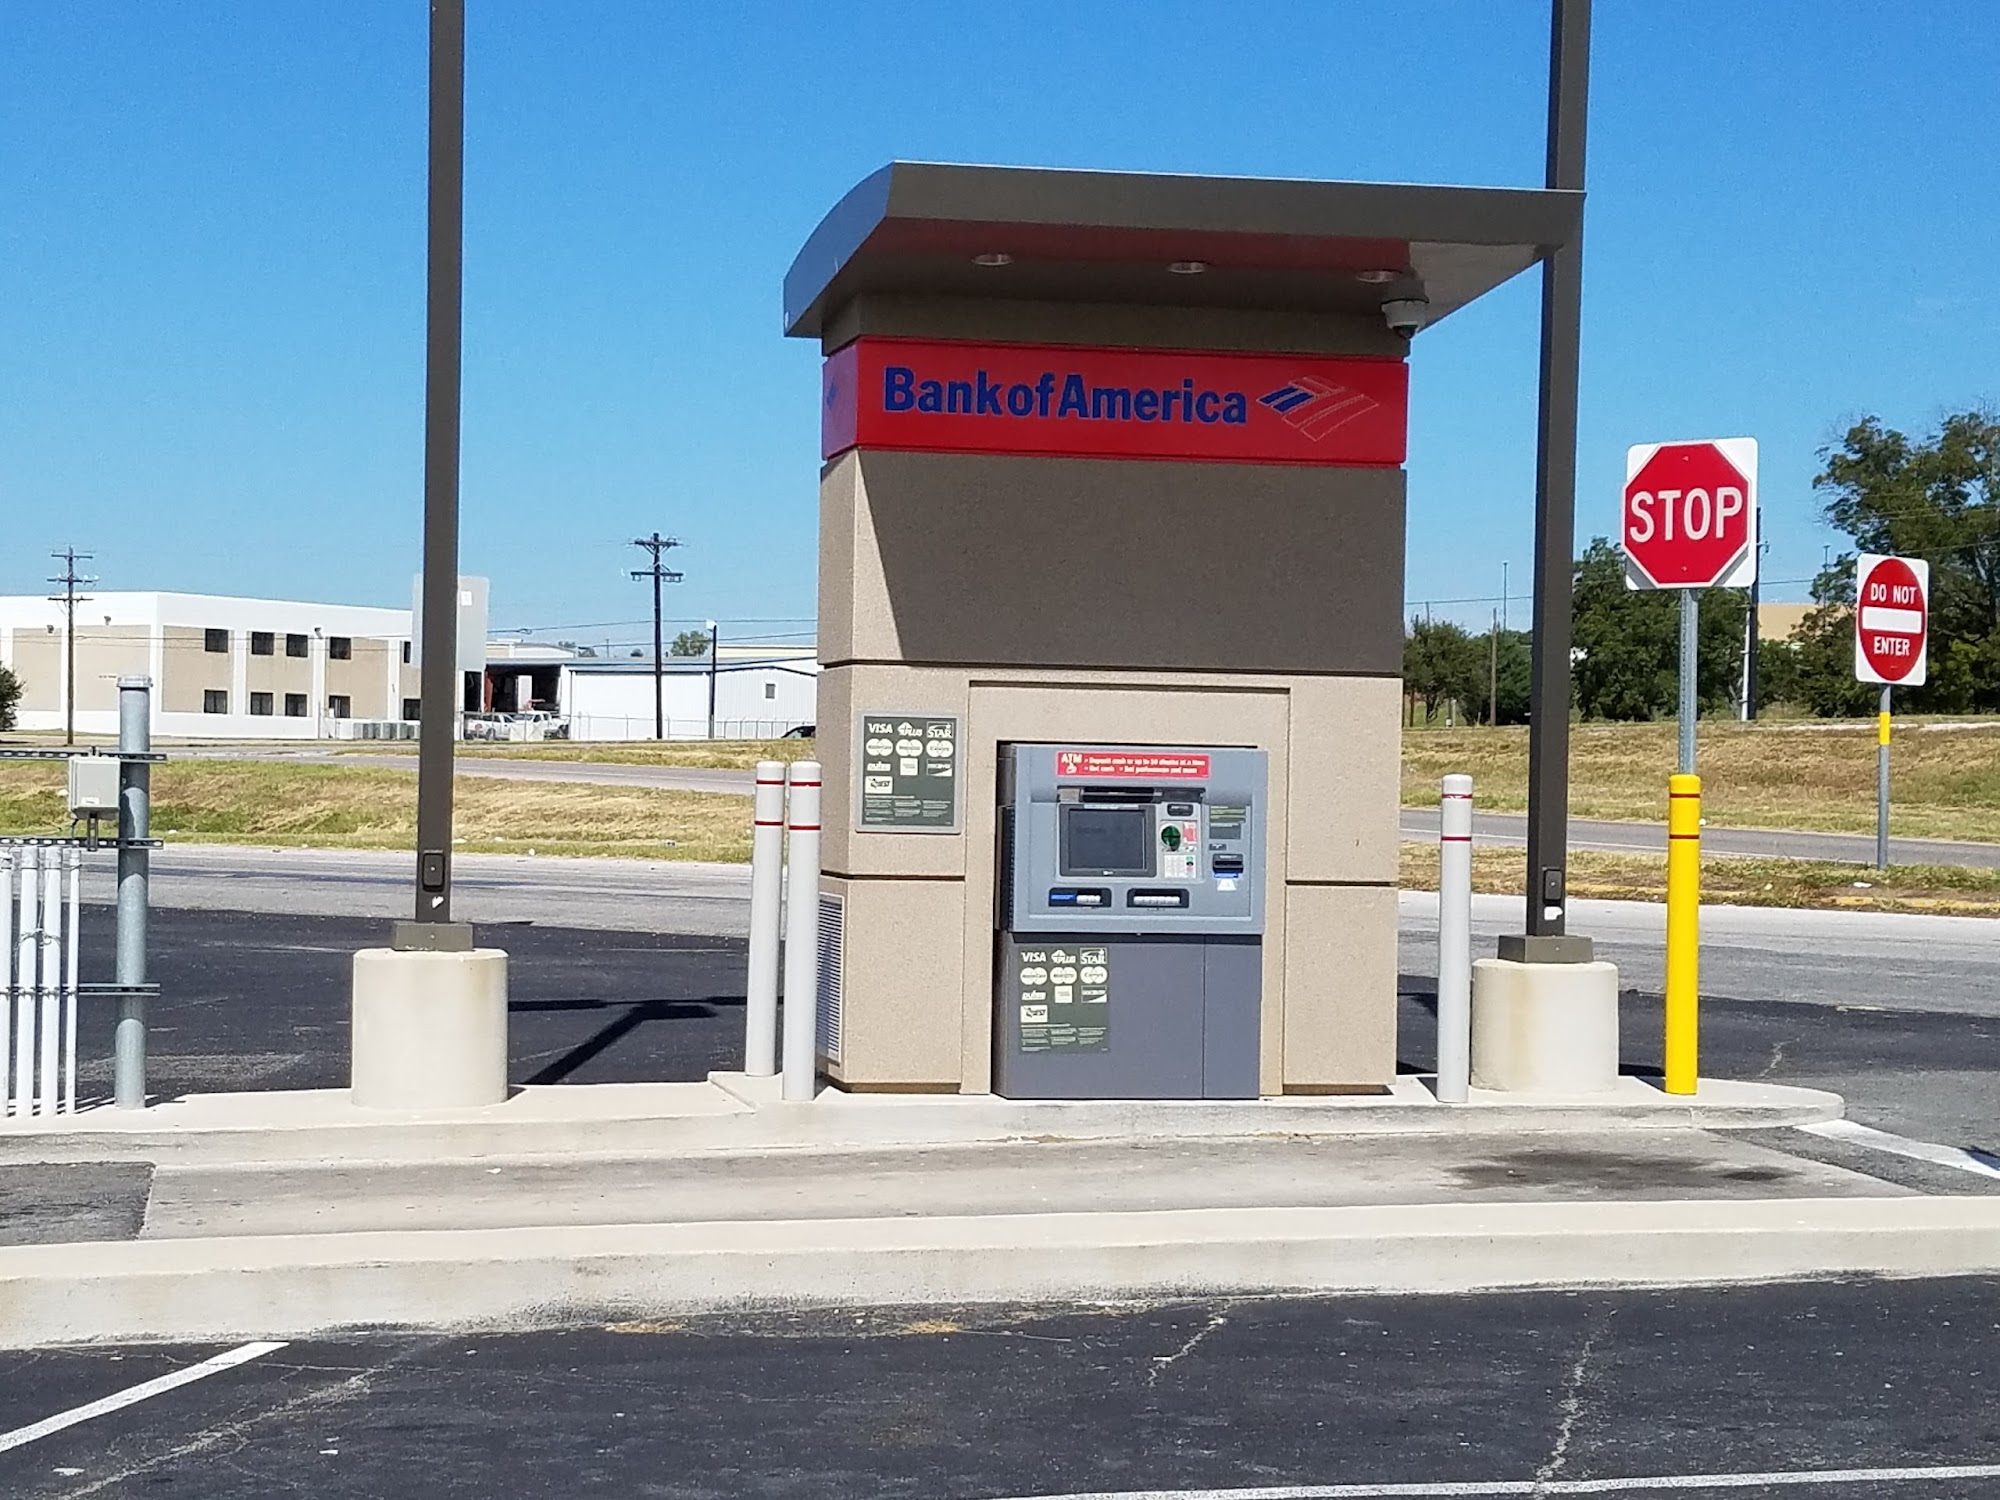 Bank of America ATM (Drive-thru)